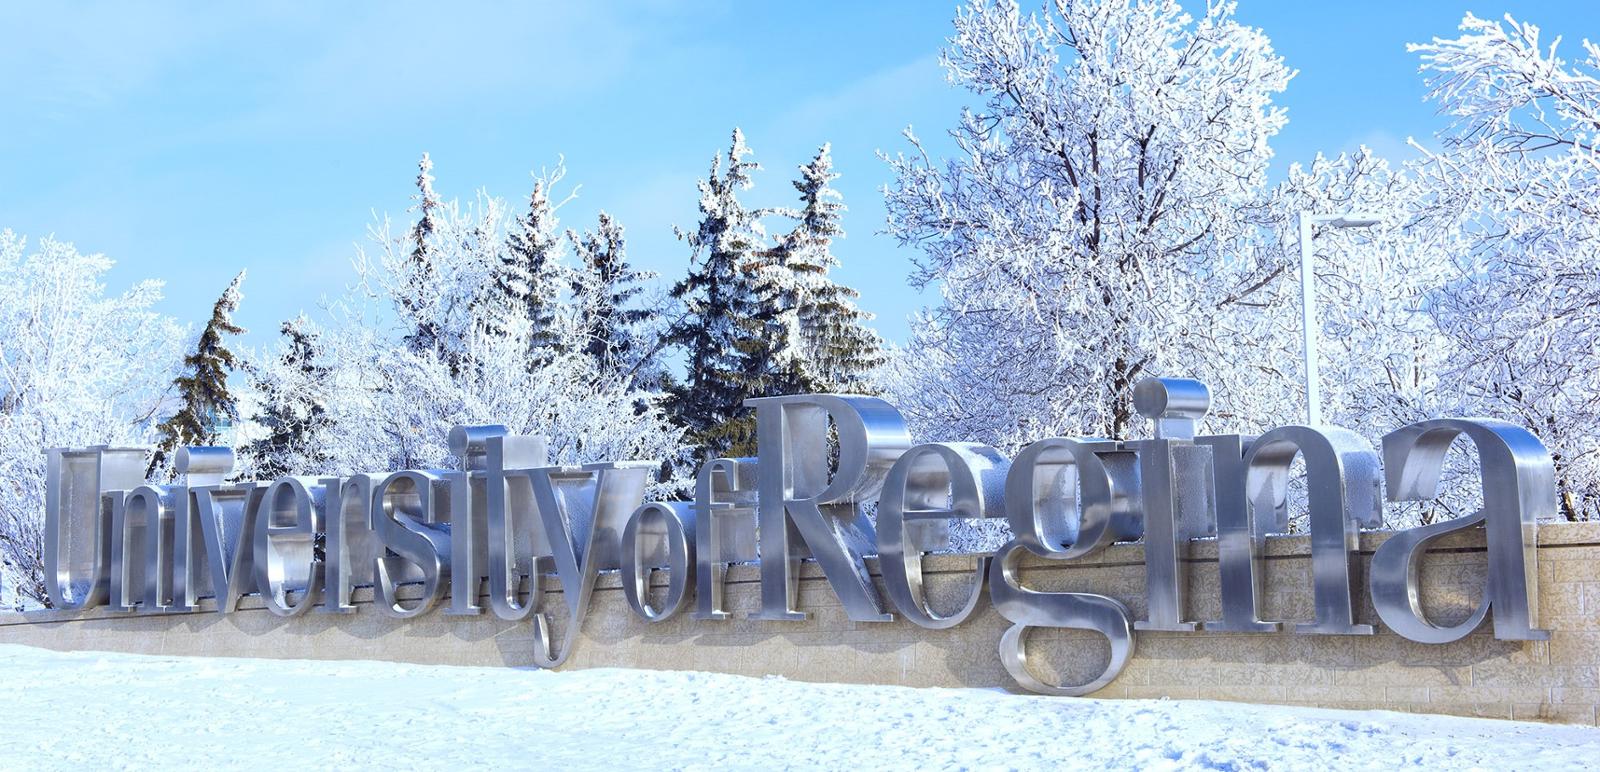 University of Regina sign in winter